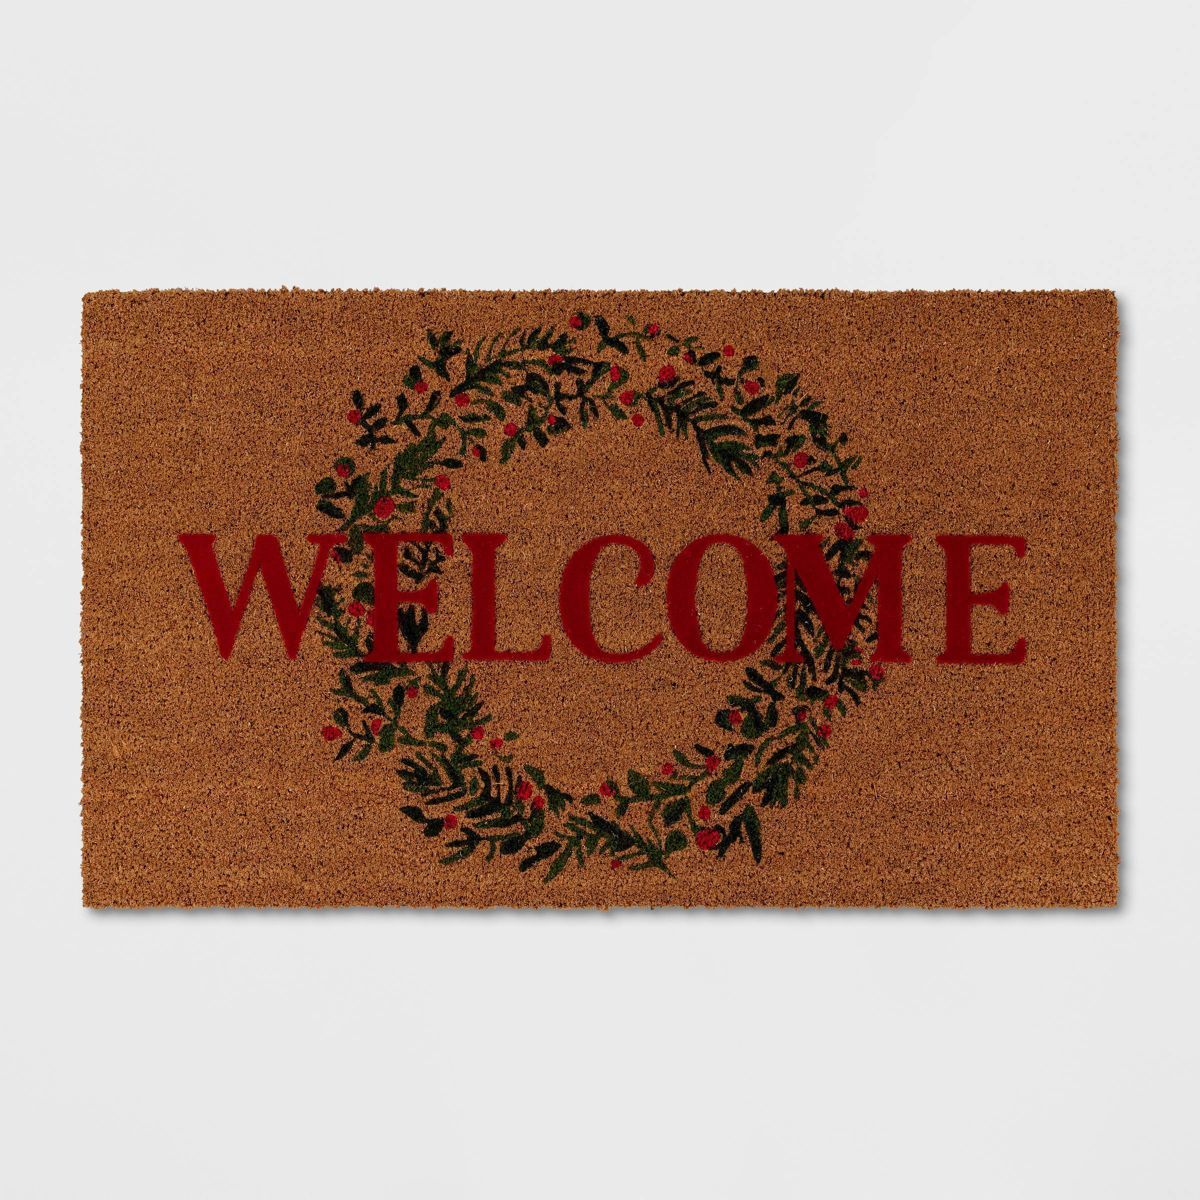 1'6"x2'6" 'Welcome' Wreath Flocked Christmas Doormat Red/Green - Wondershop™ | Target